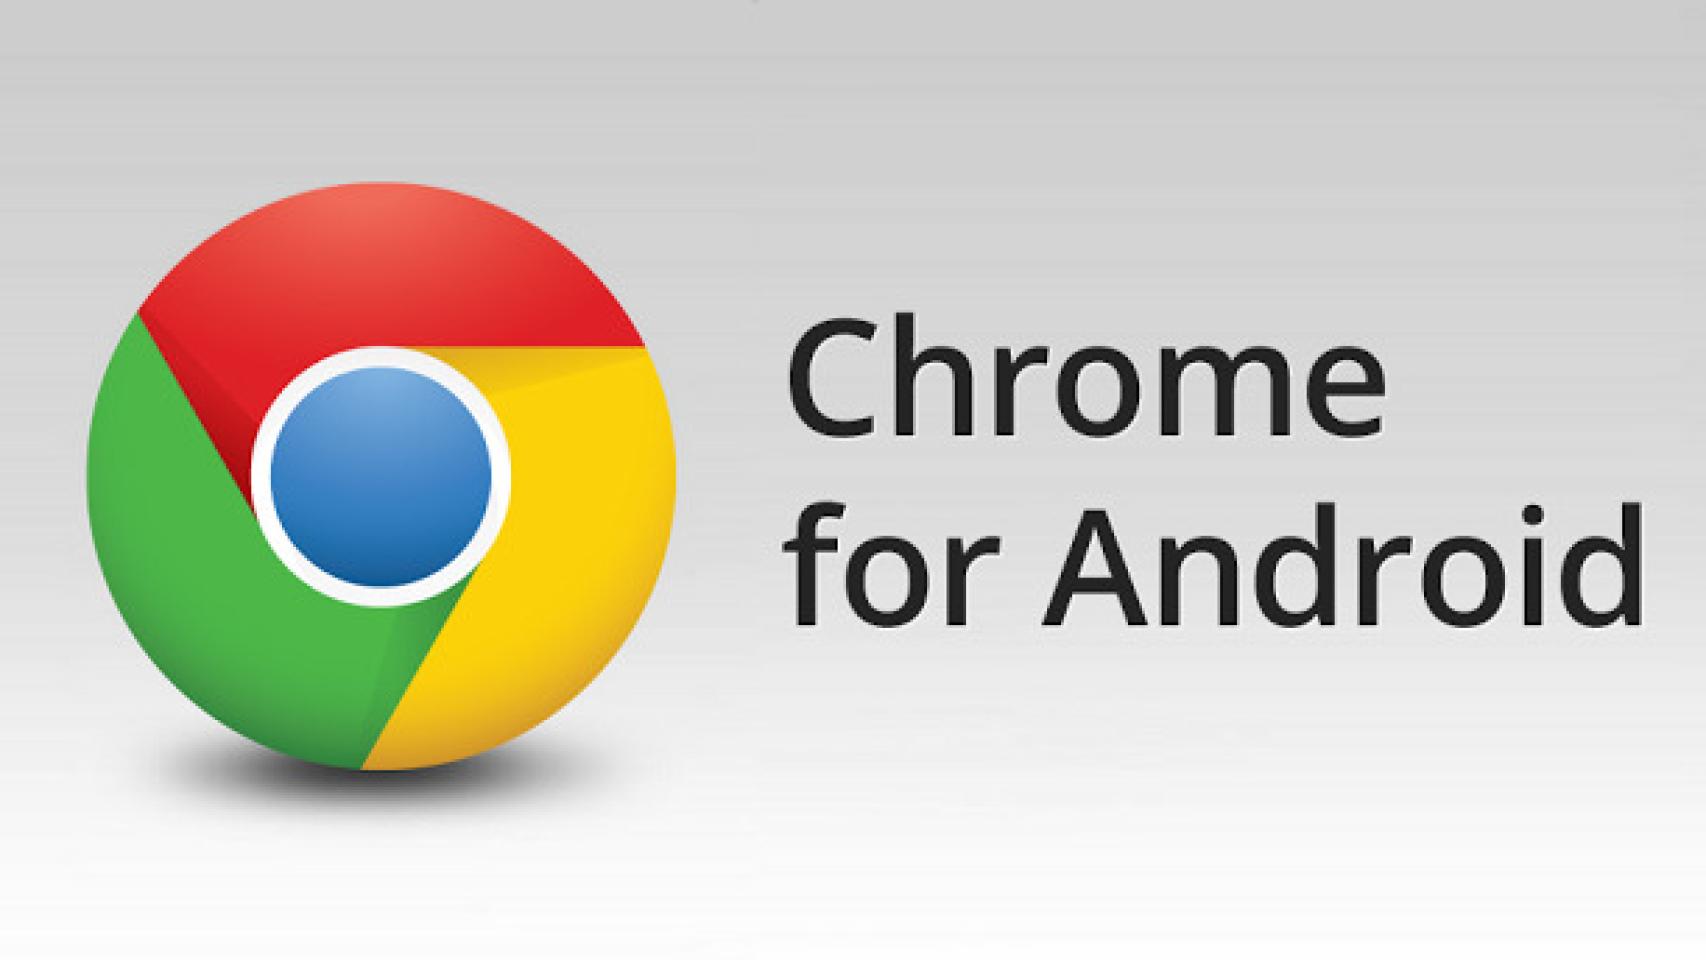 Chrome se actualiza con navegación a pantalla completa y acceso rápido al historial